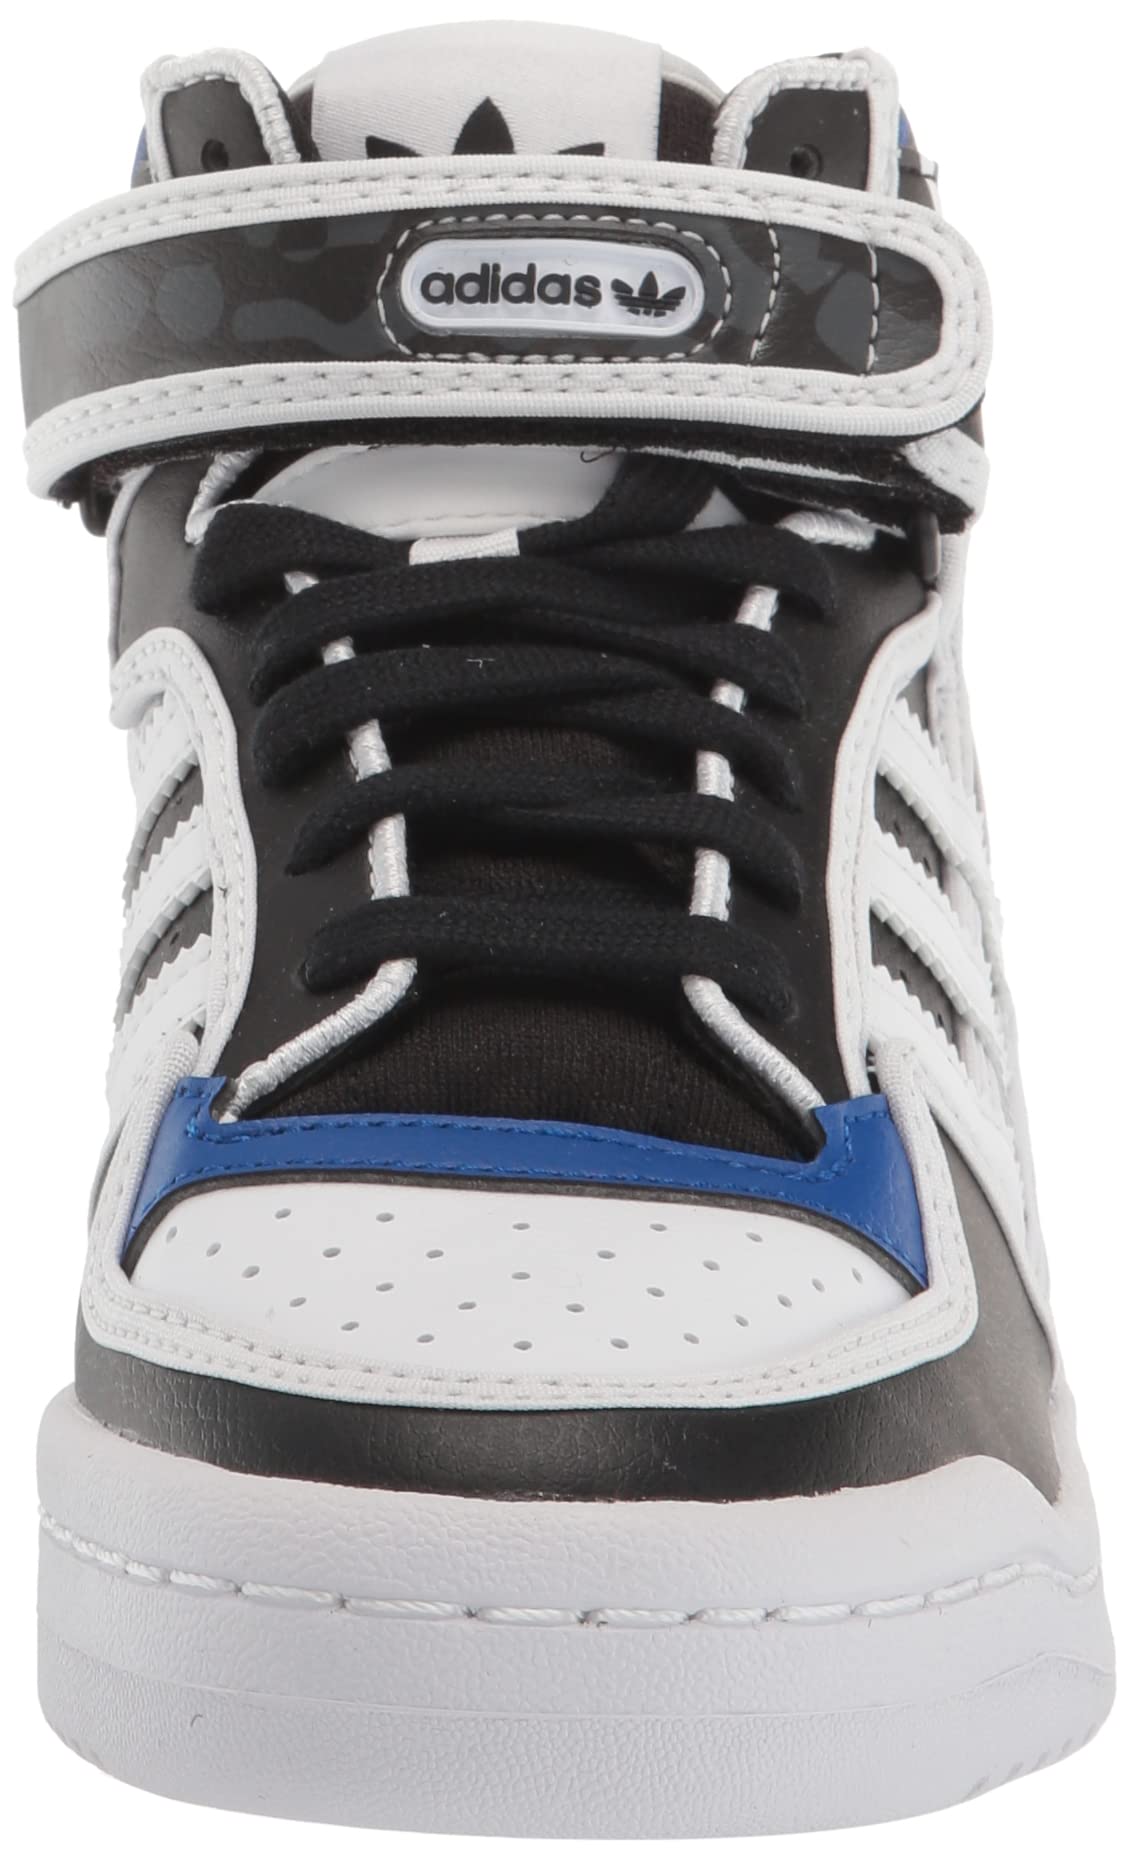 adidas Originals Women's Forum Mid Sneaker, Bold Blue/White/Core Black, 7